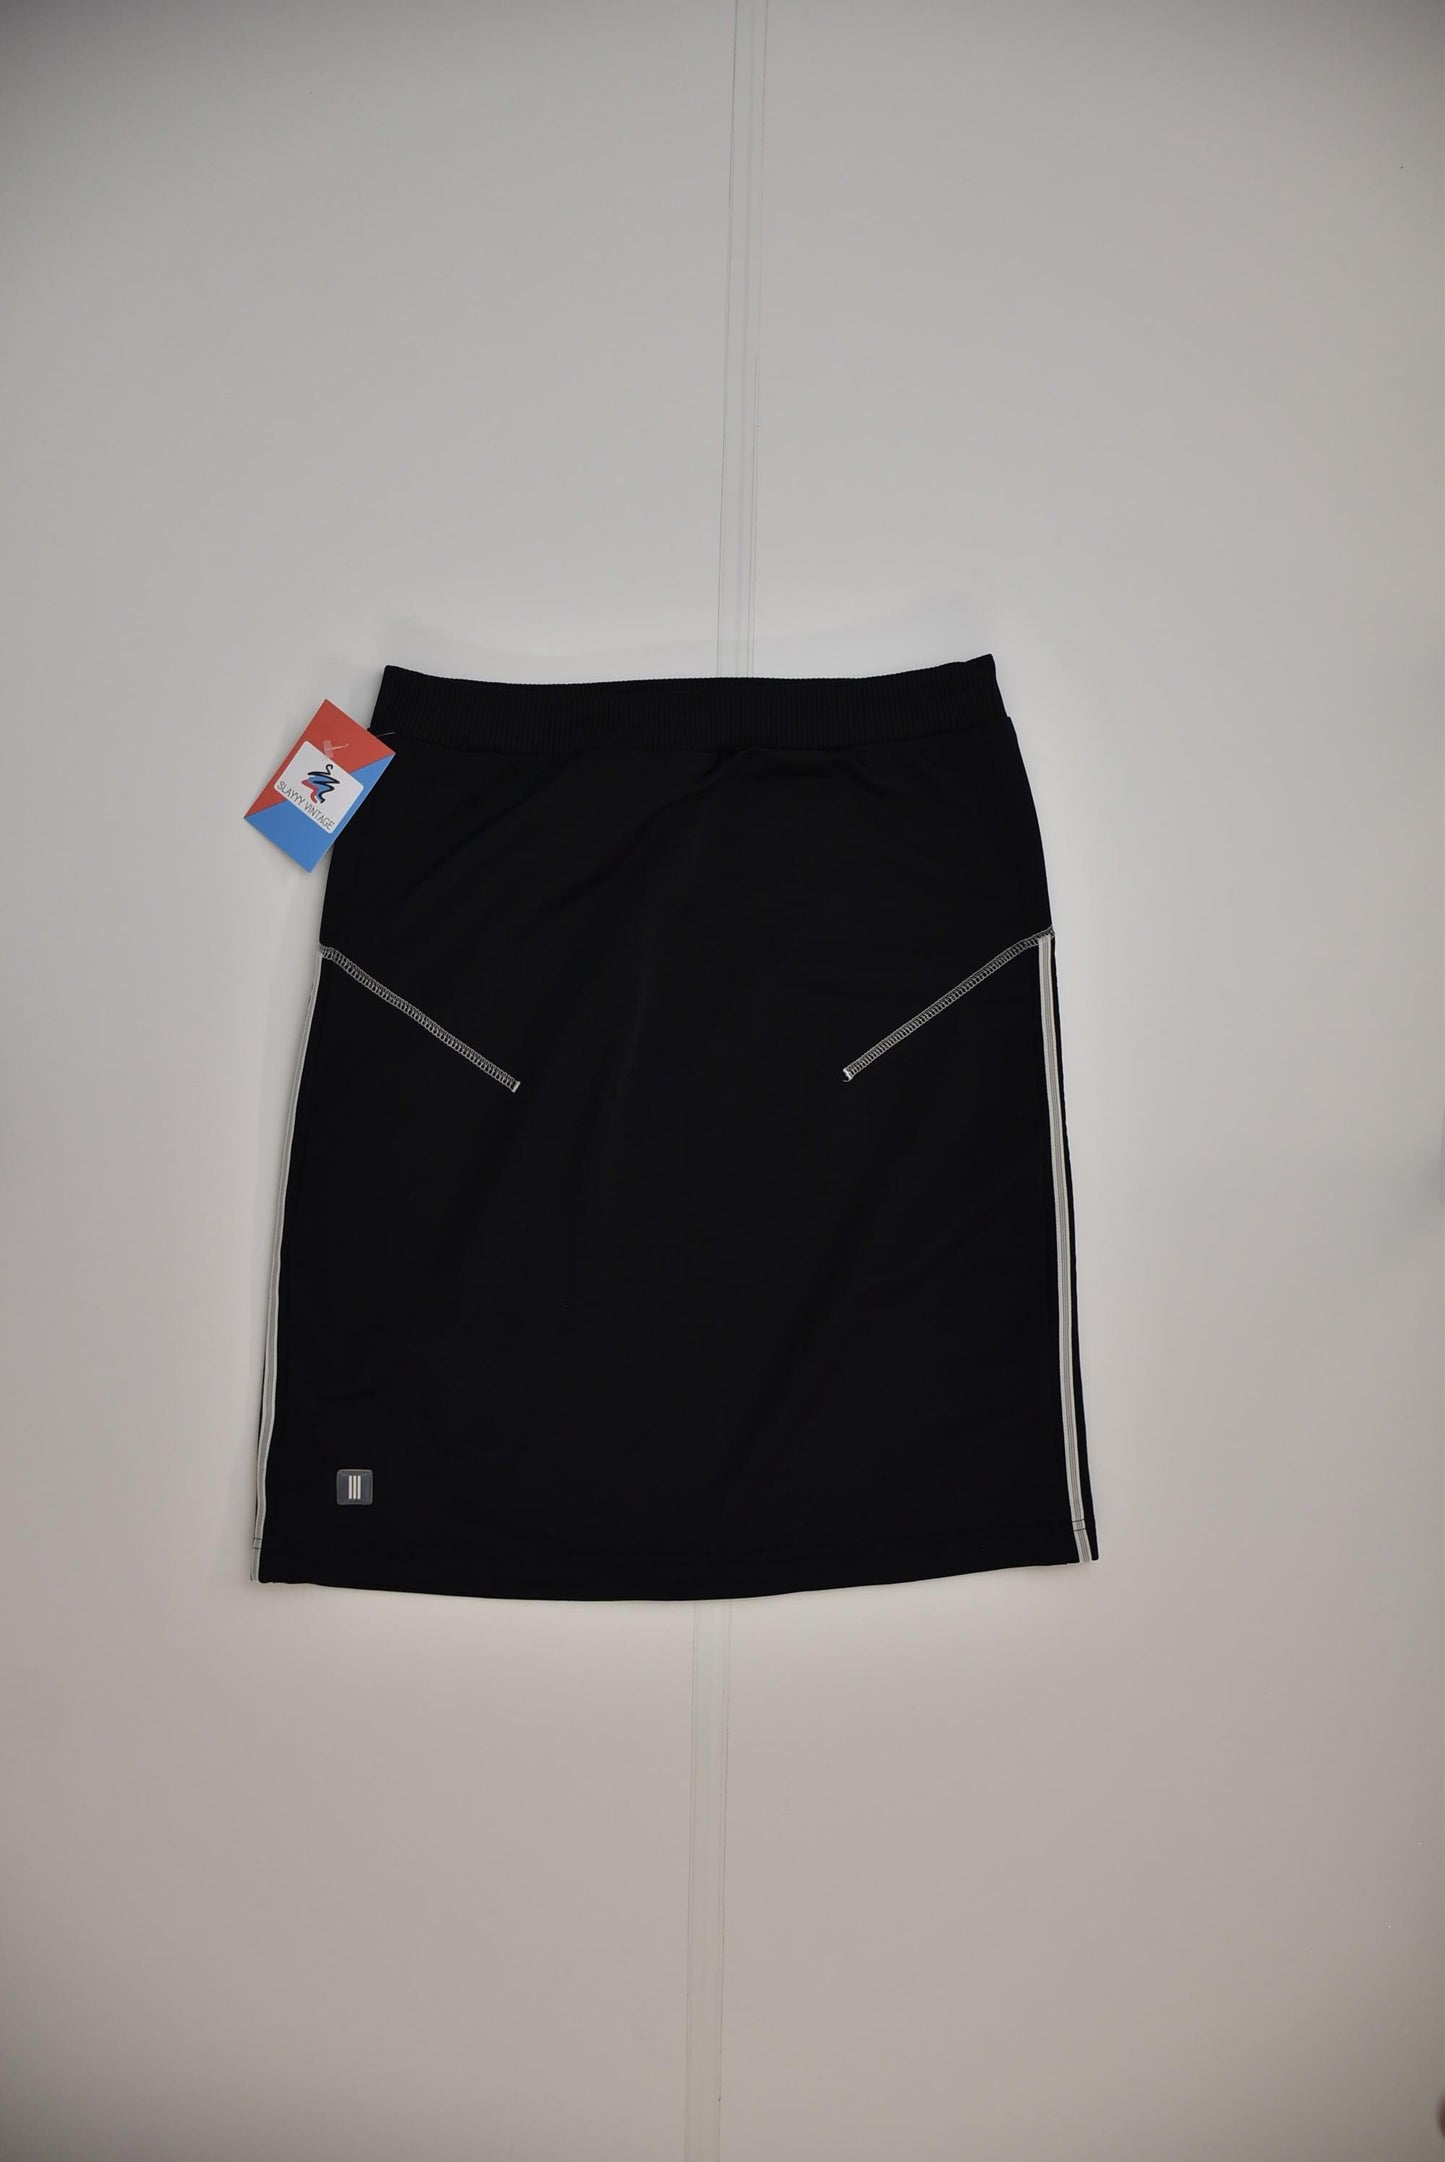 Adidas Skirt (UK10-12) - Slayyy Vintage